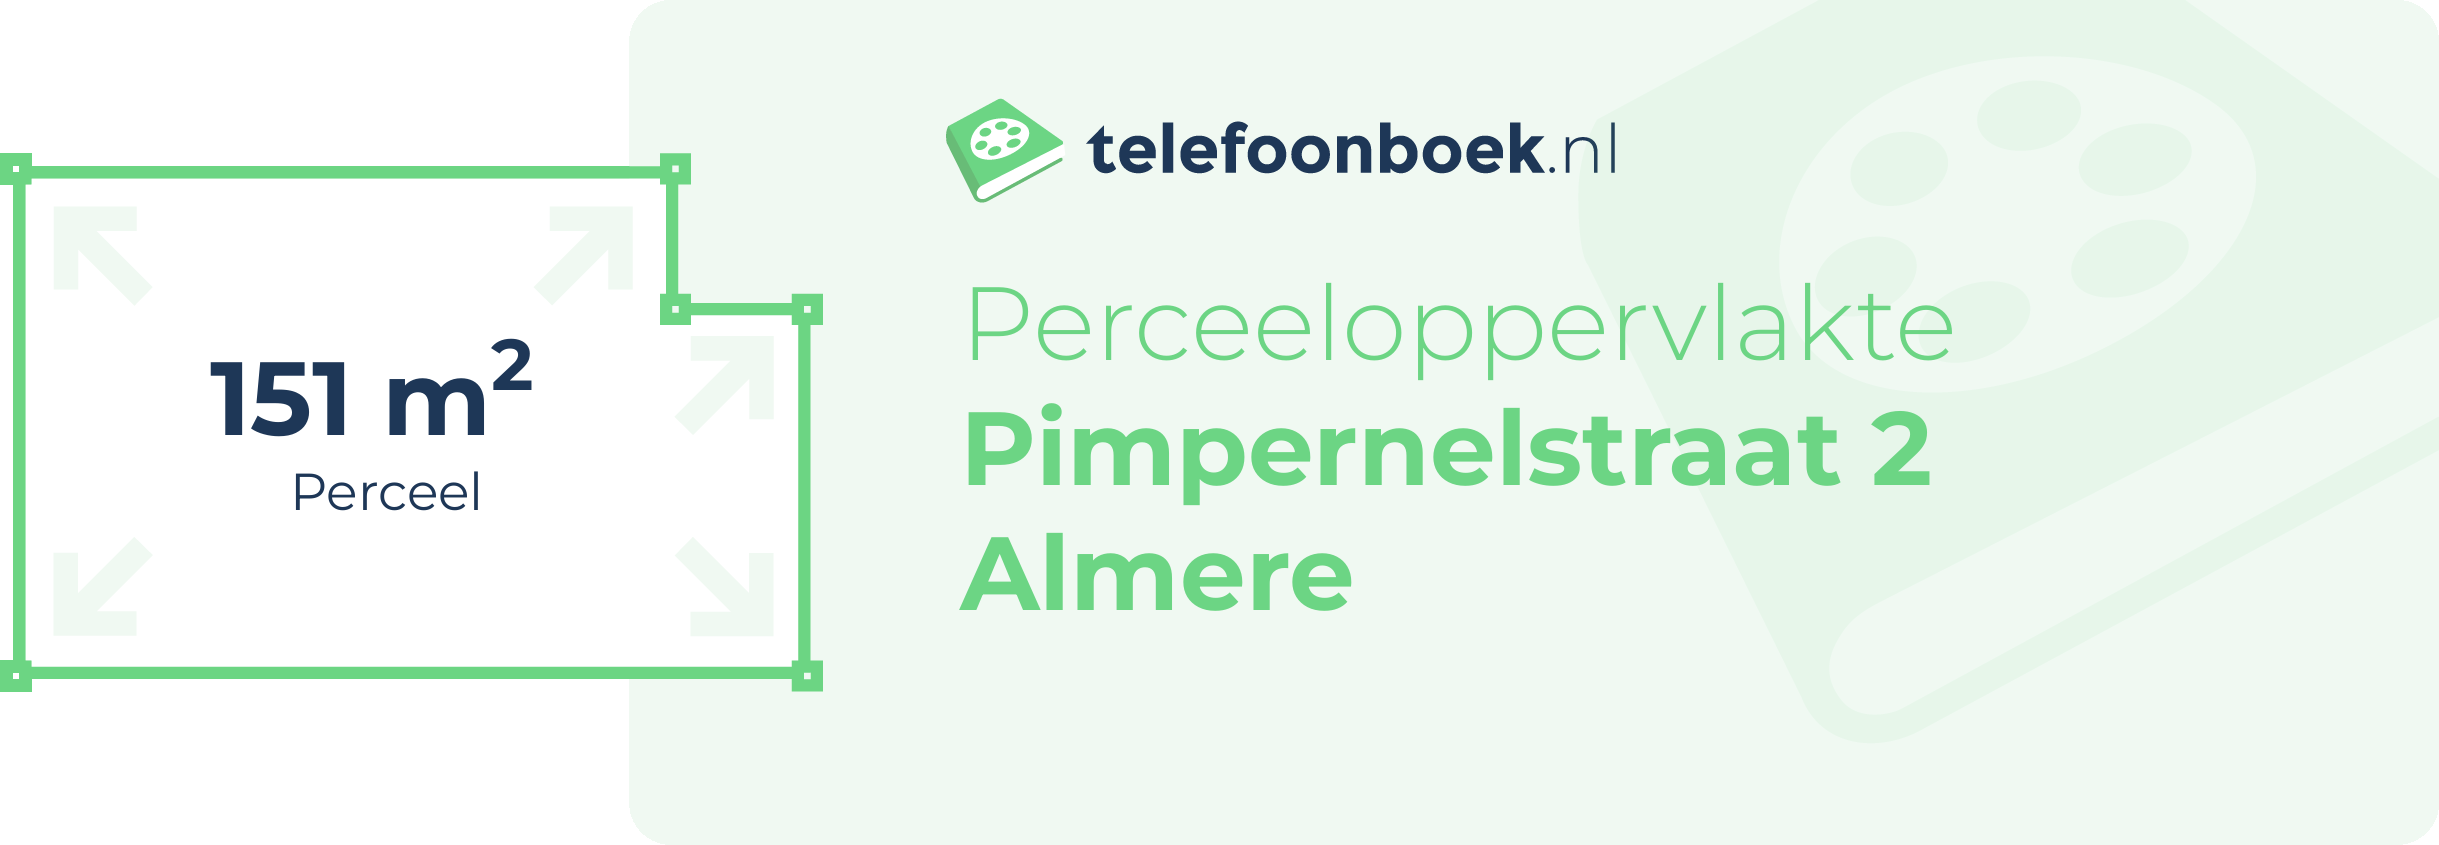 Perceeloppervlakte Pimpernelstraat 2 Almere